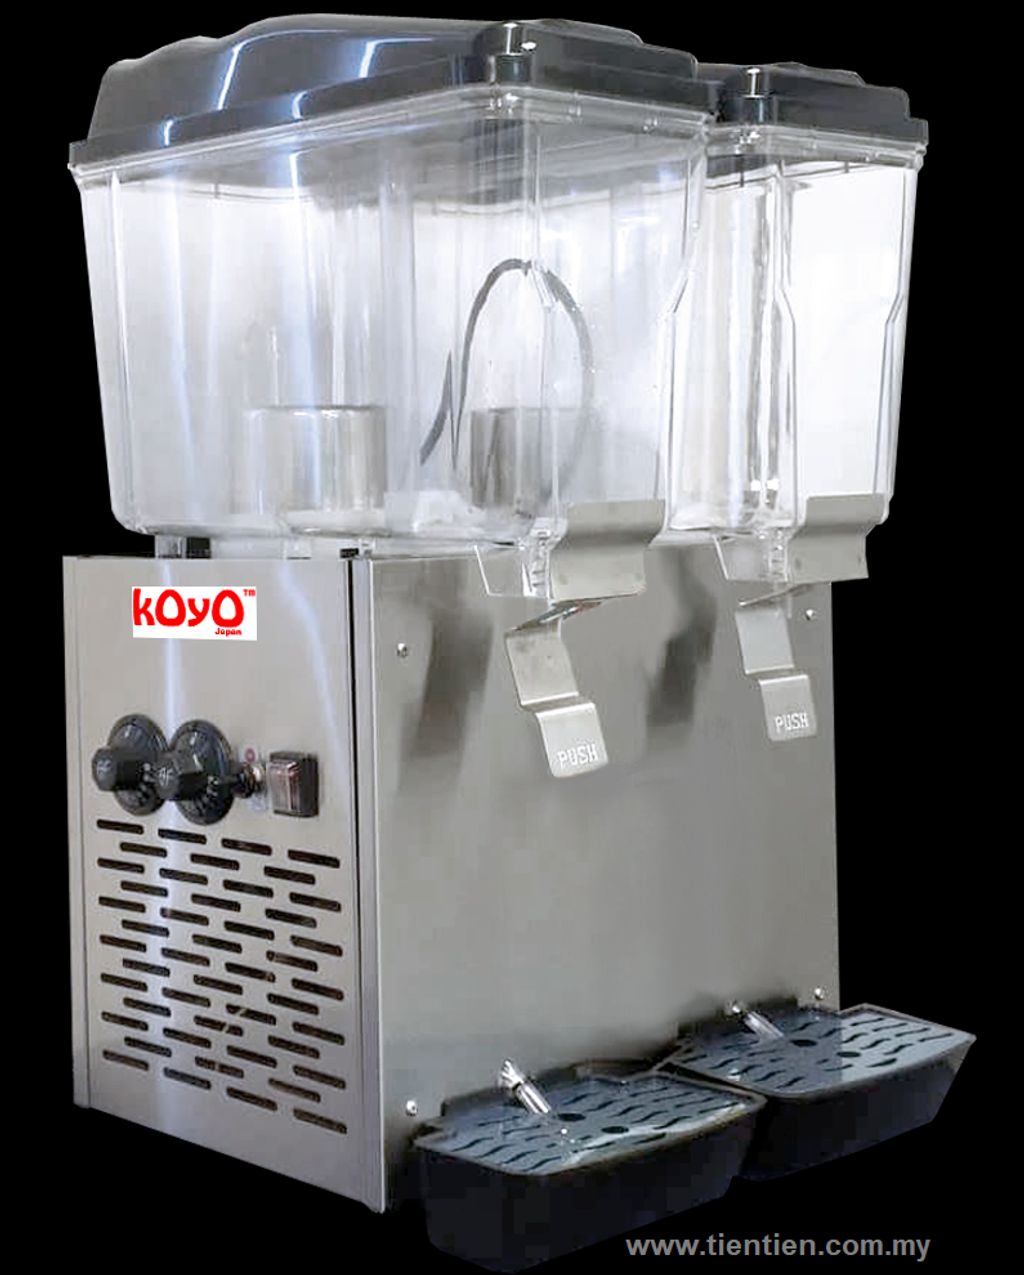 koyodual-tank-dispenser-juice-jd2ch-tientien-malaysia.png